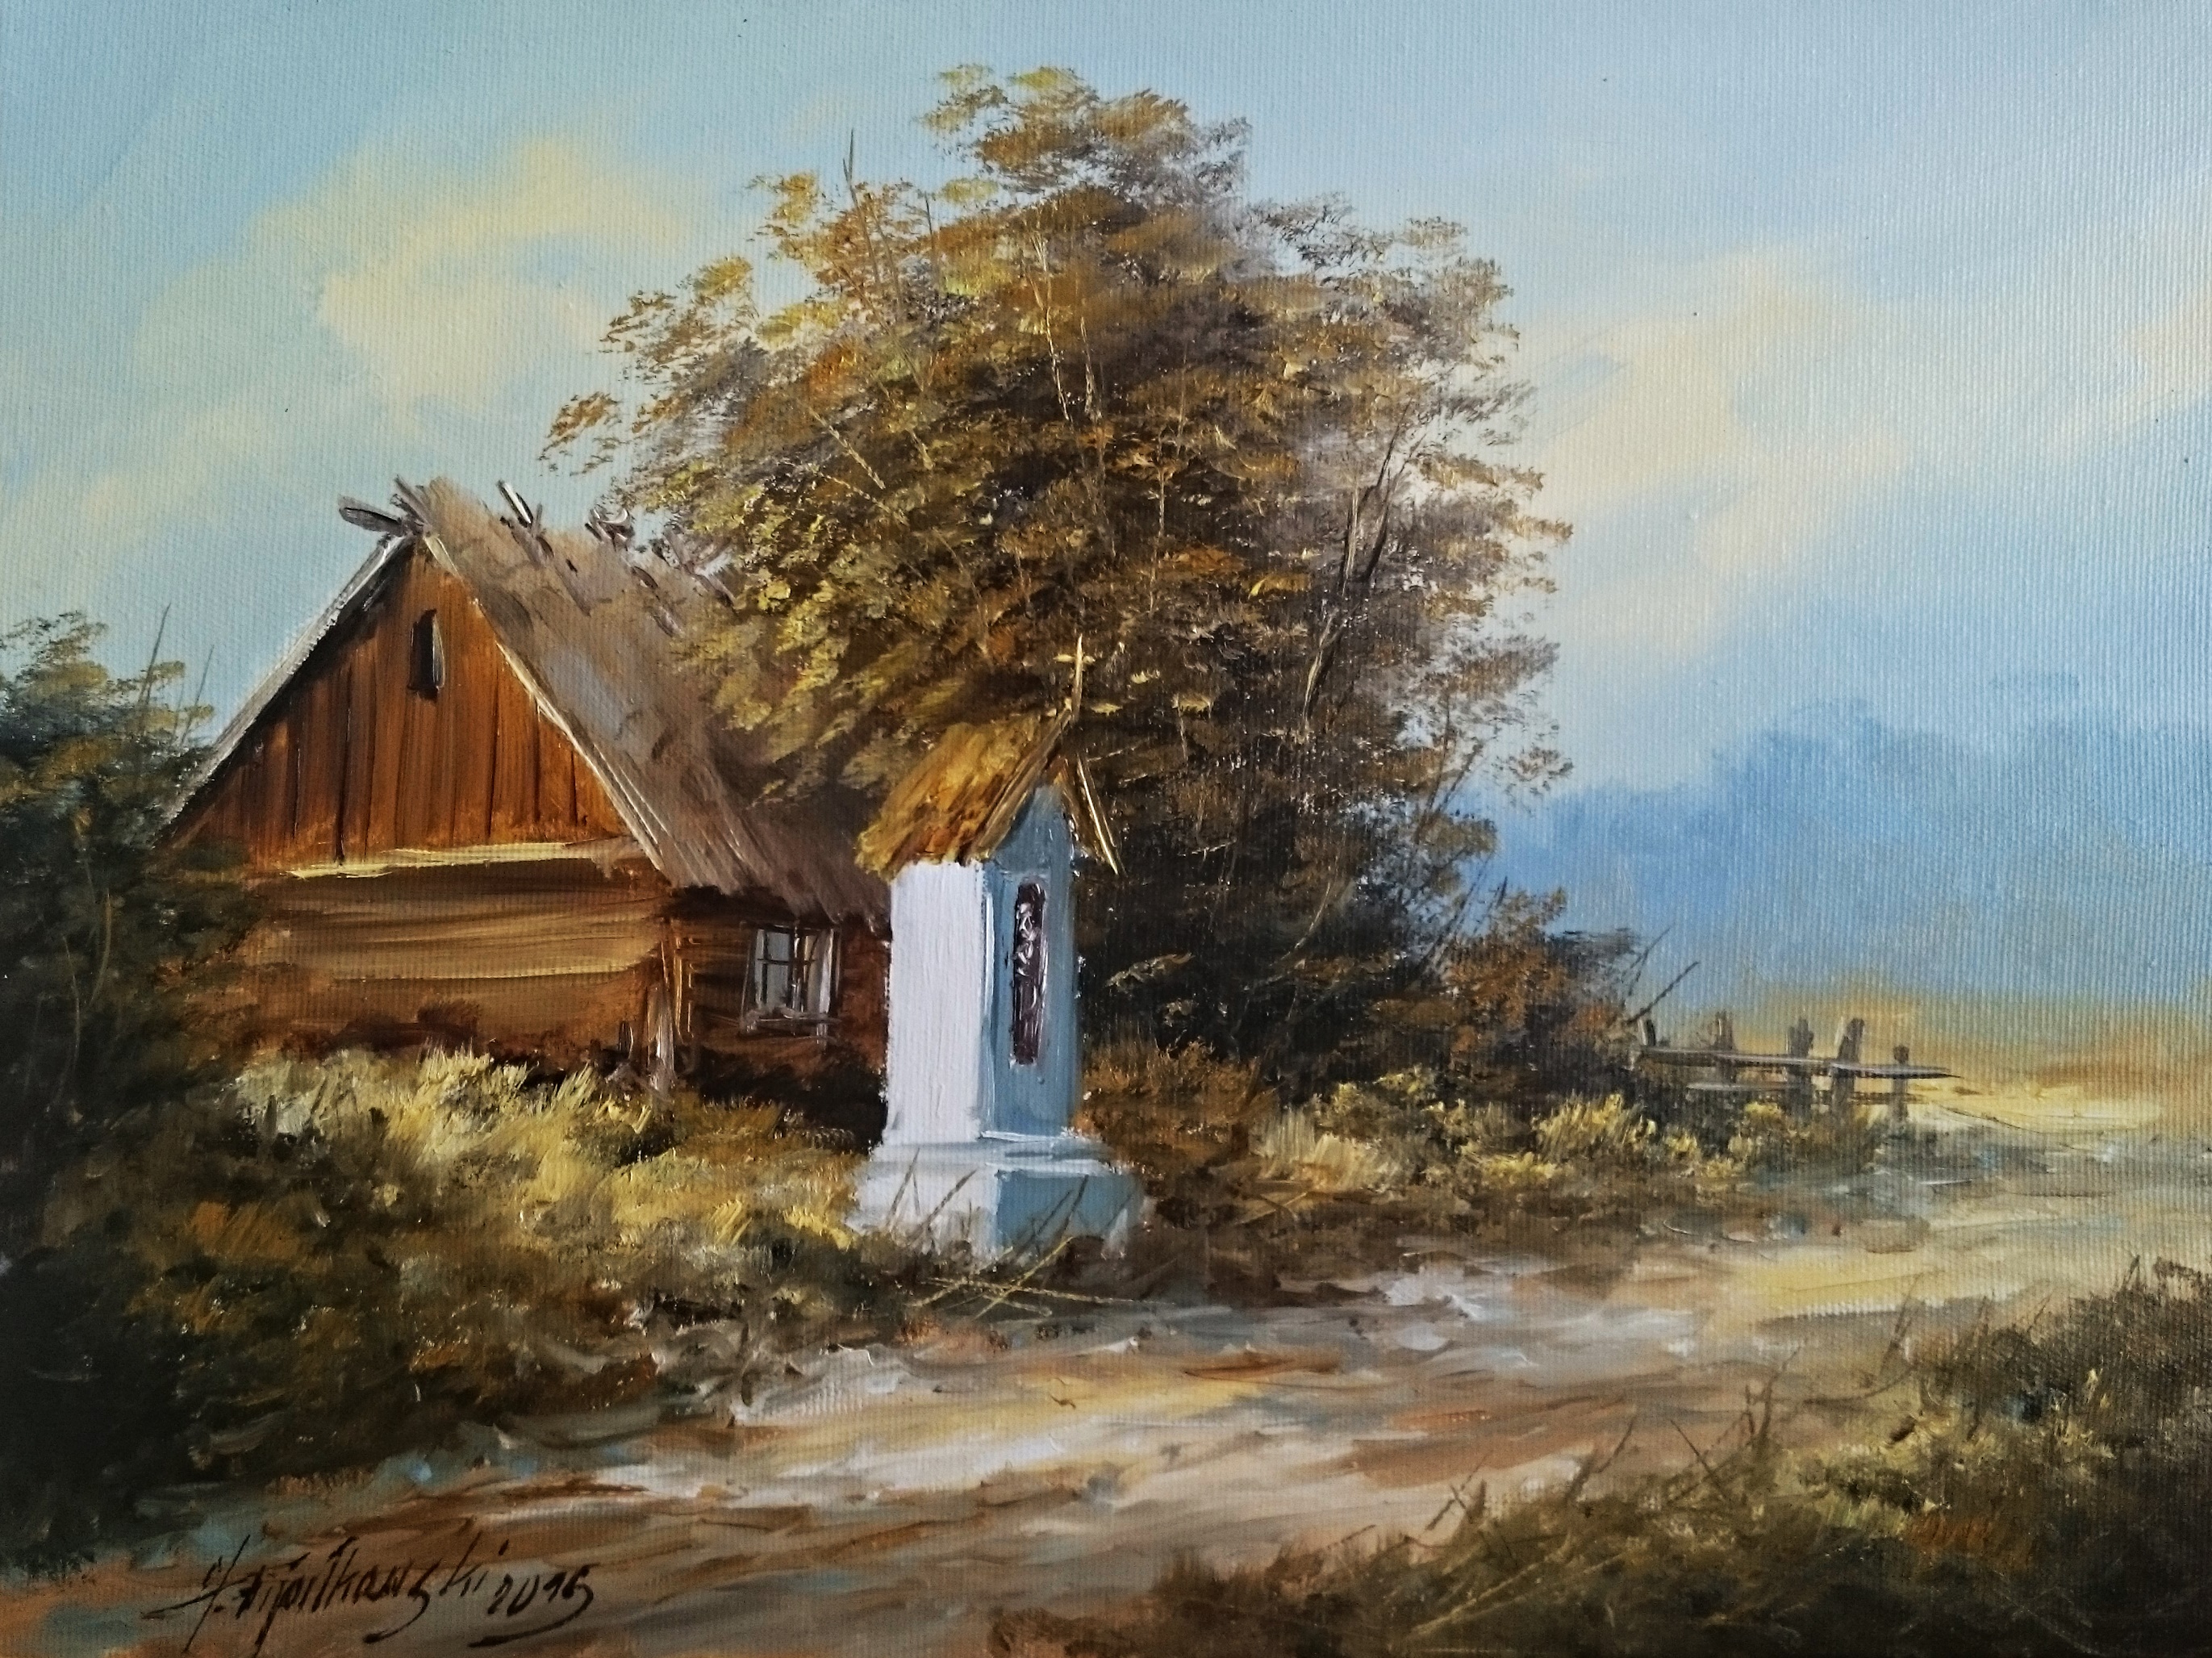 https://obrazyramy.files.wordpress.com/2015/10/obrazy-olejne-pejzac5bc-fijac582kowski-oil-painting-5.jpg